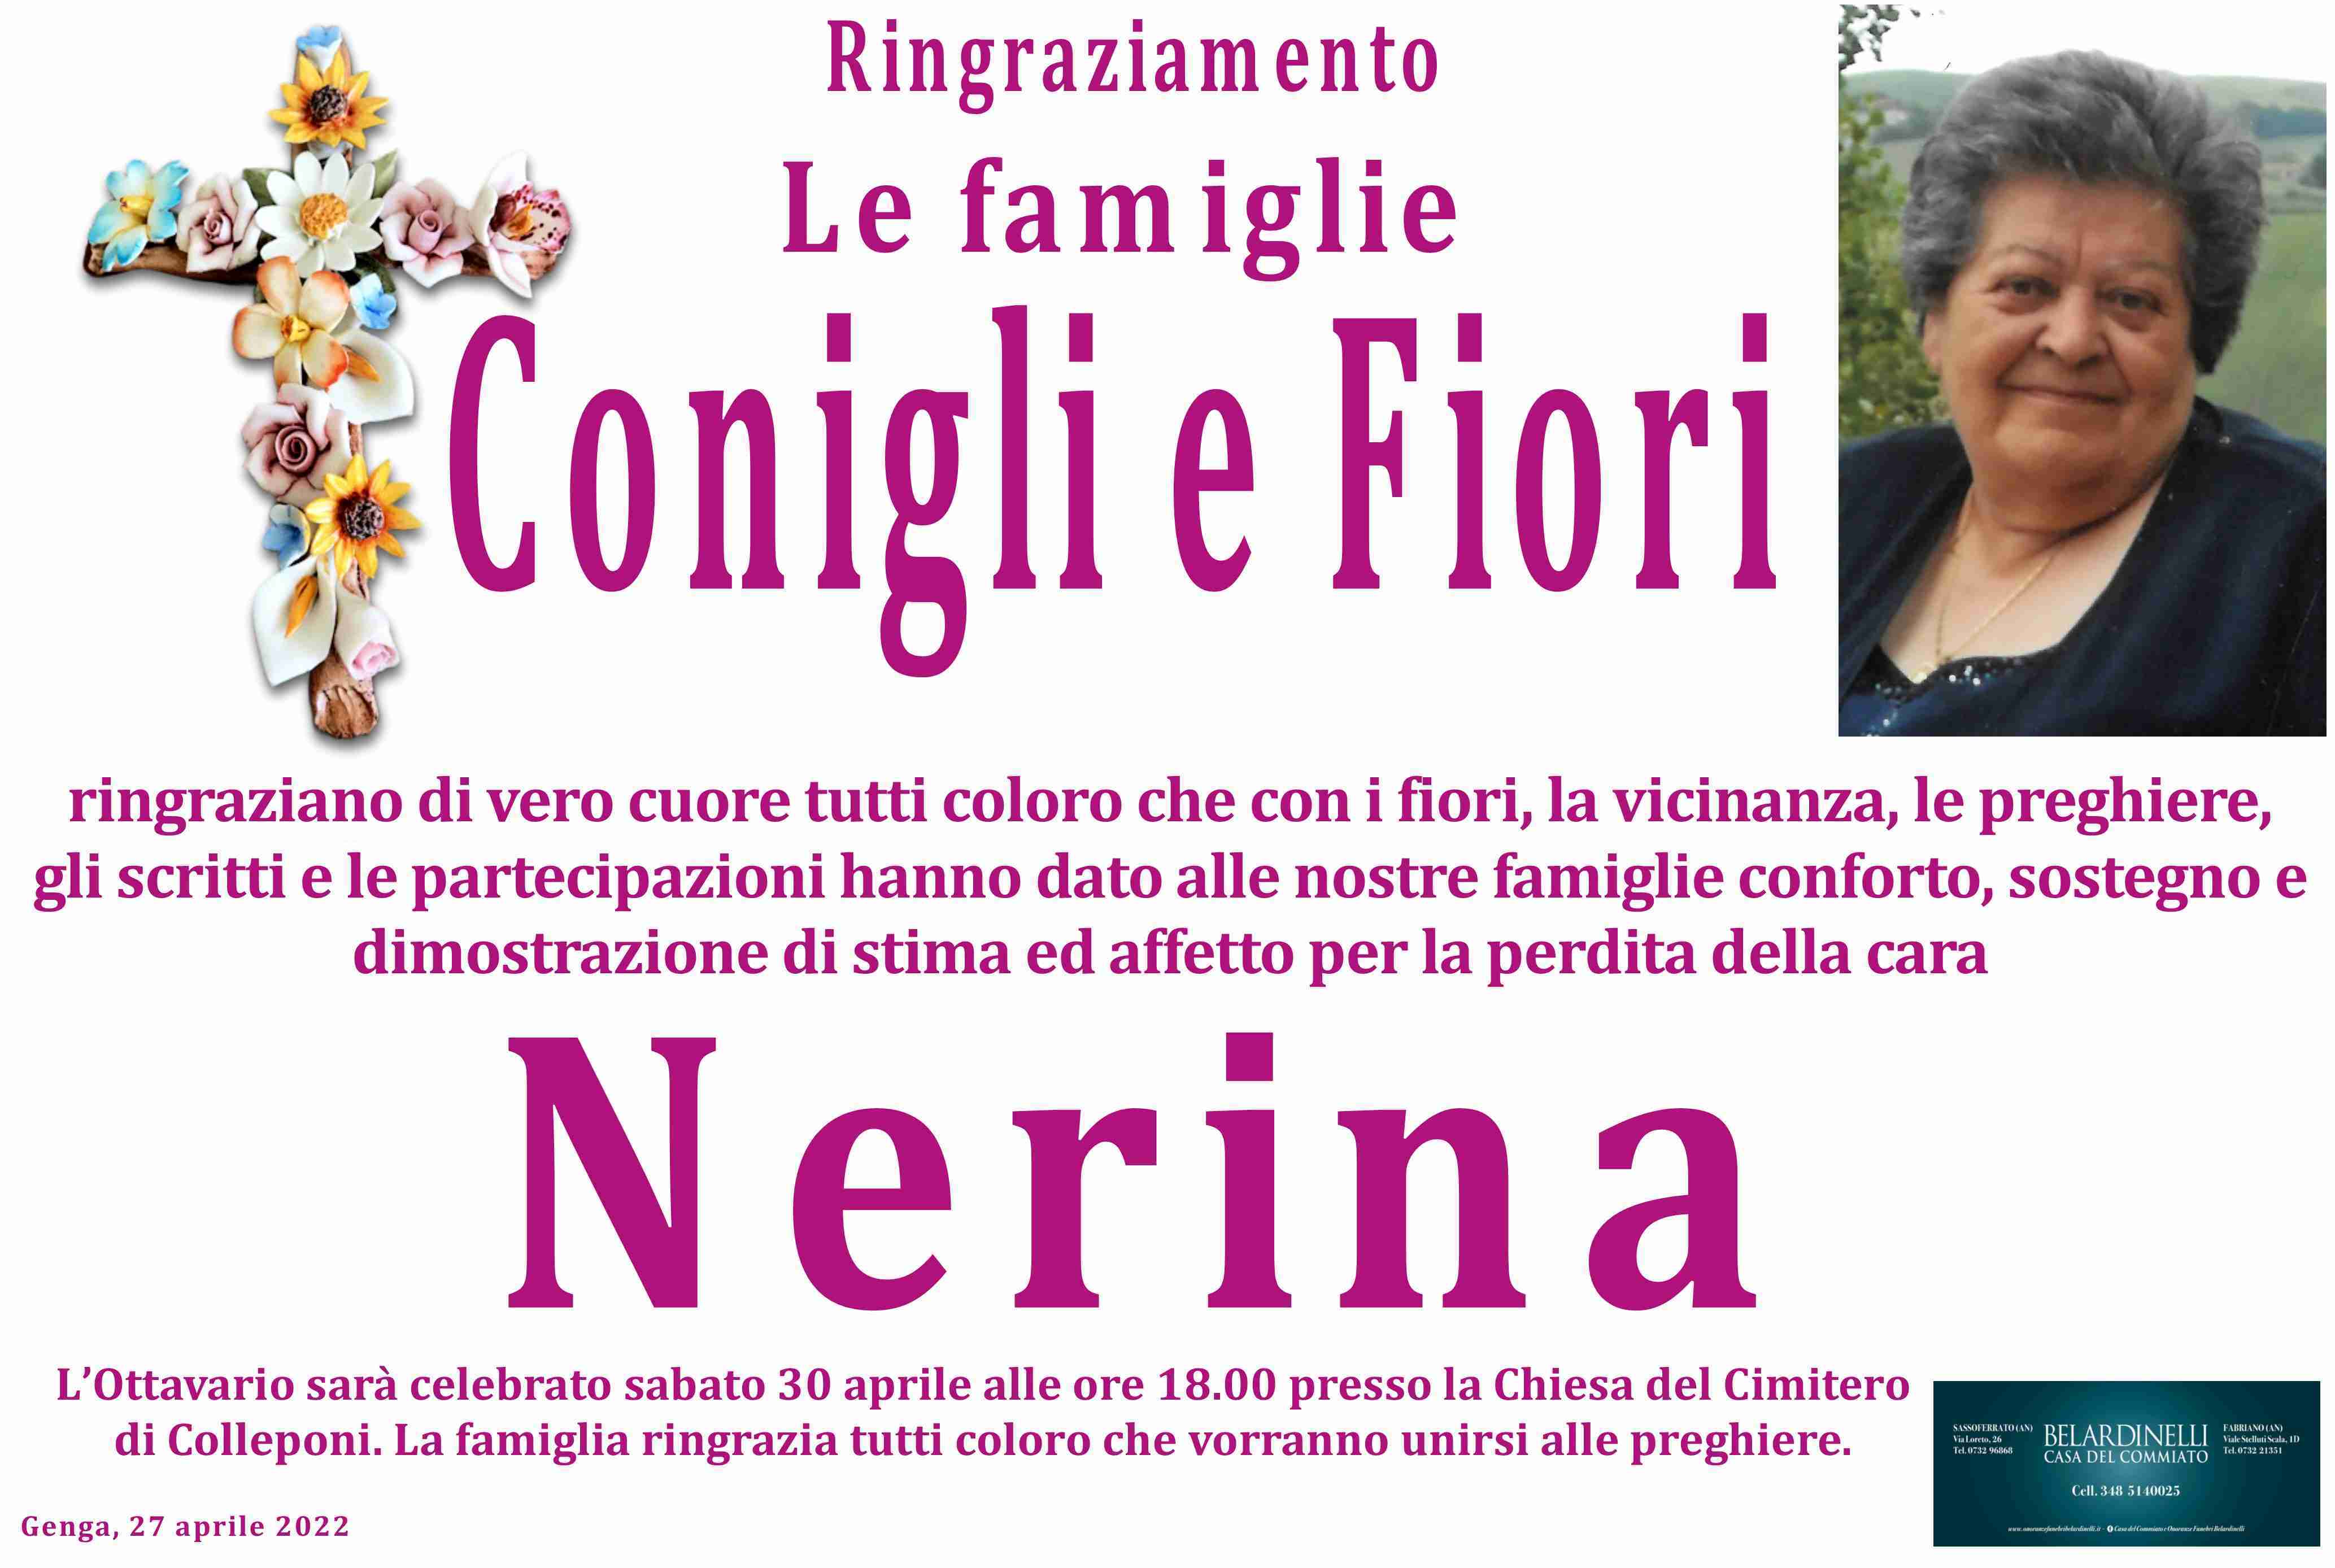 Nerina Fiori